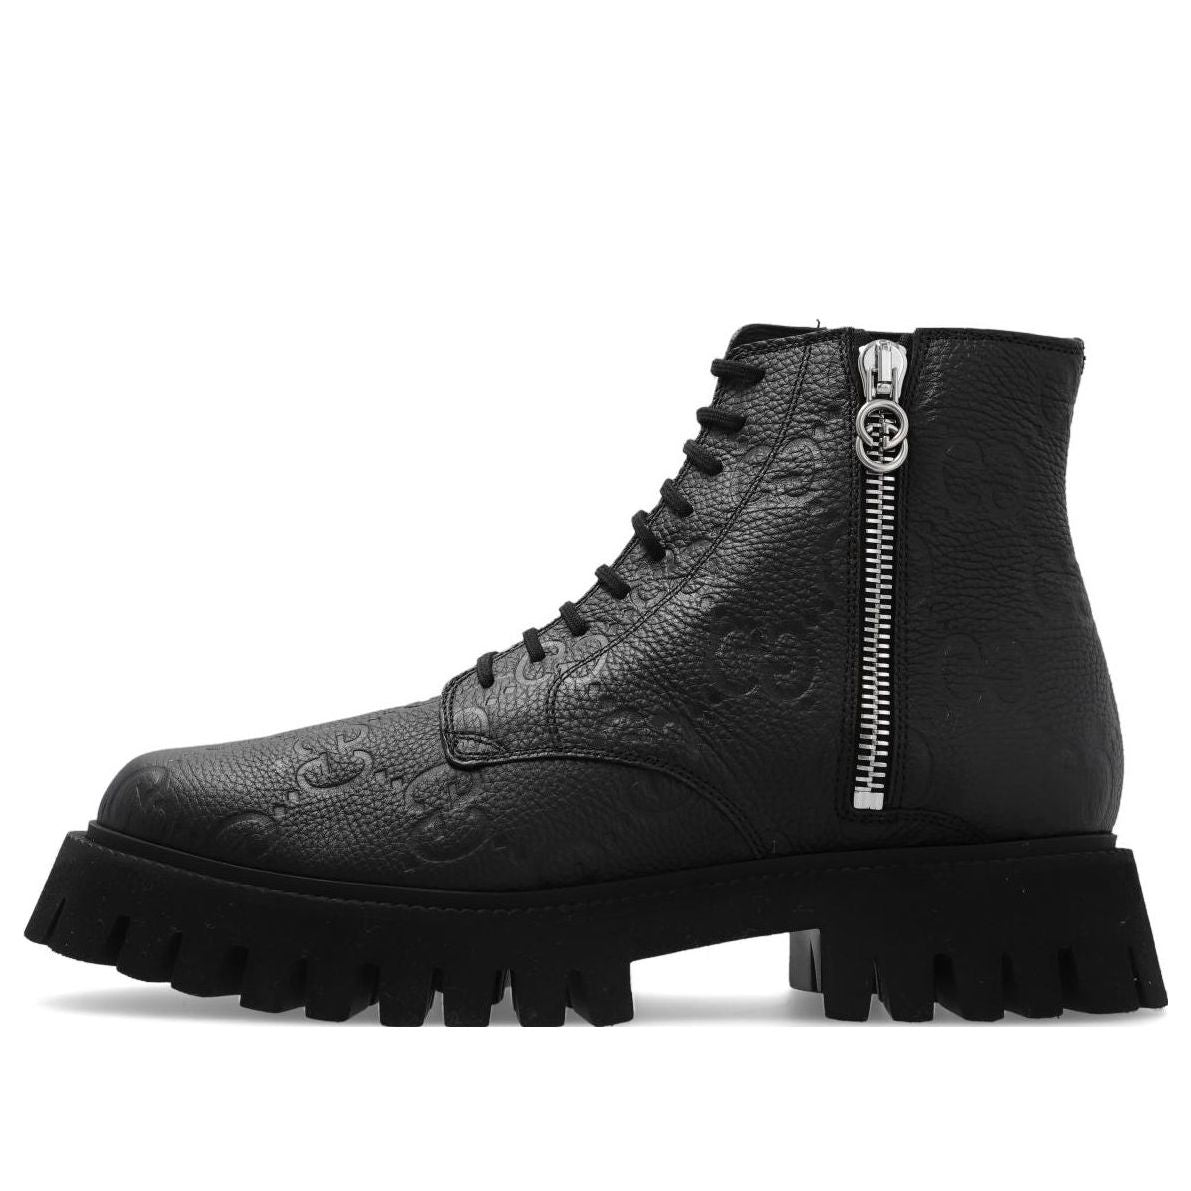 Gucci GG leather boot 'Black' 699584-AACJC-1000 - KICKS CREW